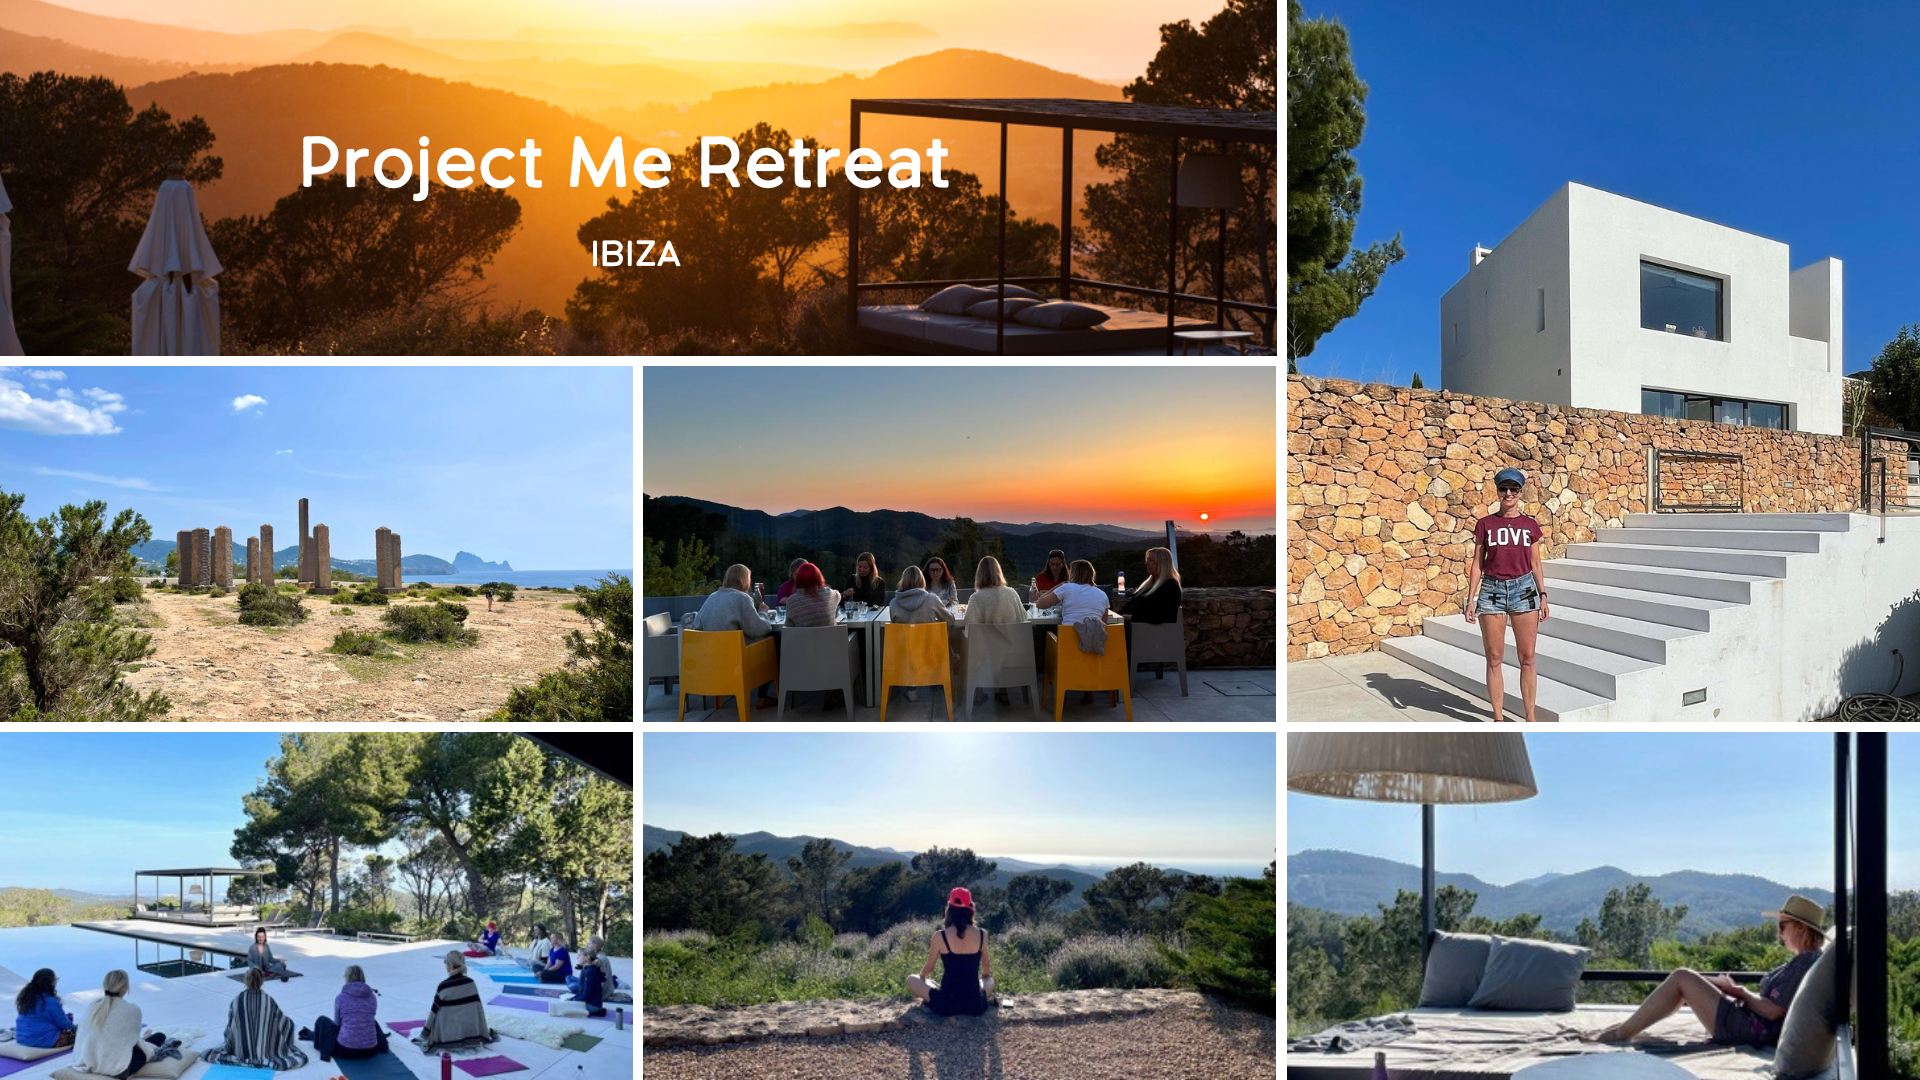 The Project Me Ibiza women's retreat